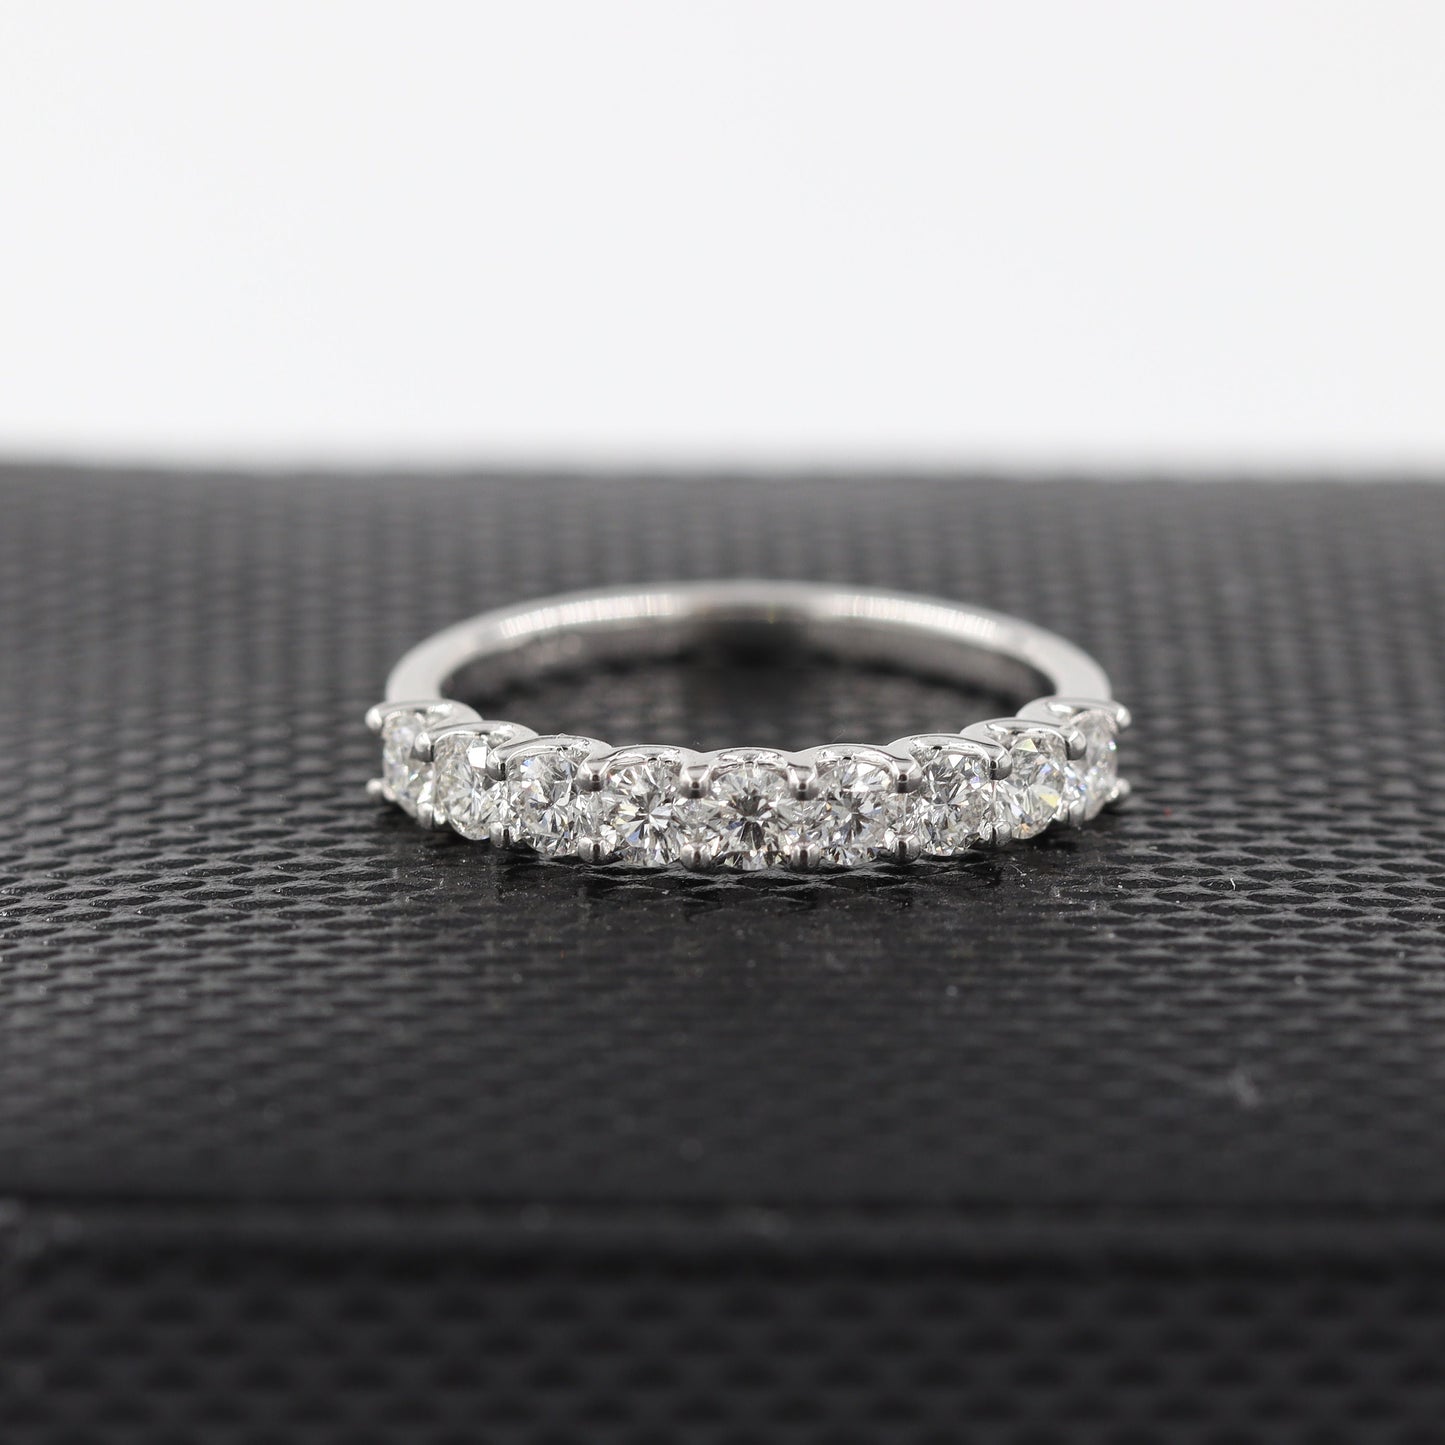 Half Round Diamond Ring / Wedding Band / Round Diamond Band / Stackable Diamond Wedding Ring / Engagement Ring / Gift for her